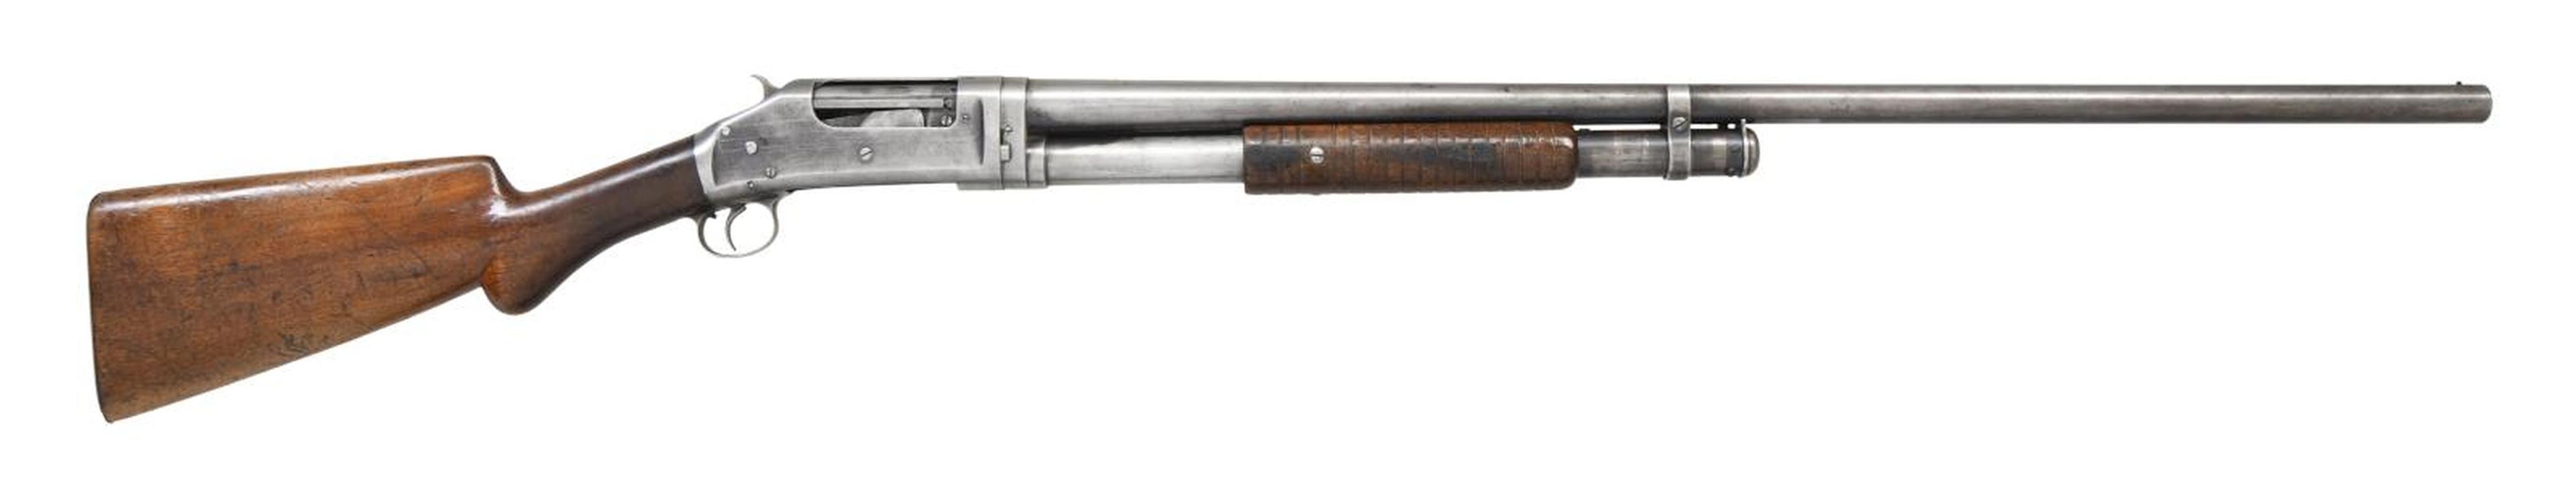 WINCHESTER 1897 TAKEDOWN PUMP SHOTGUN.